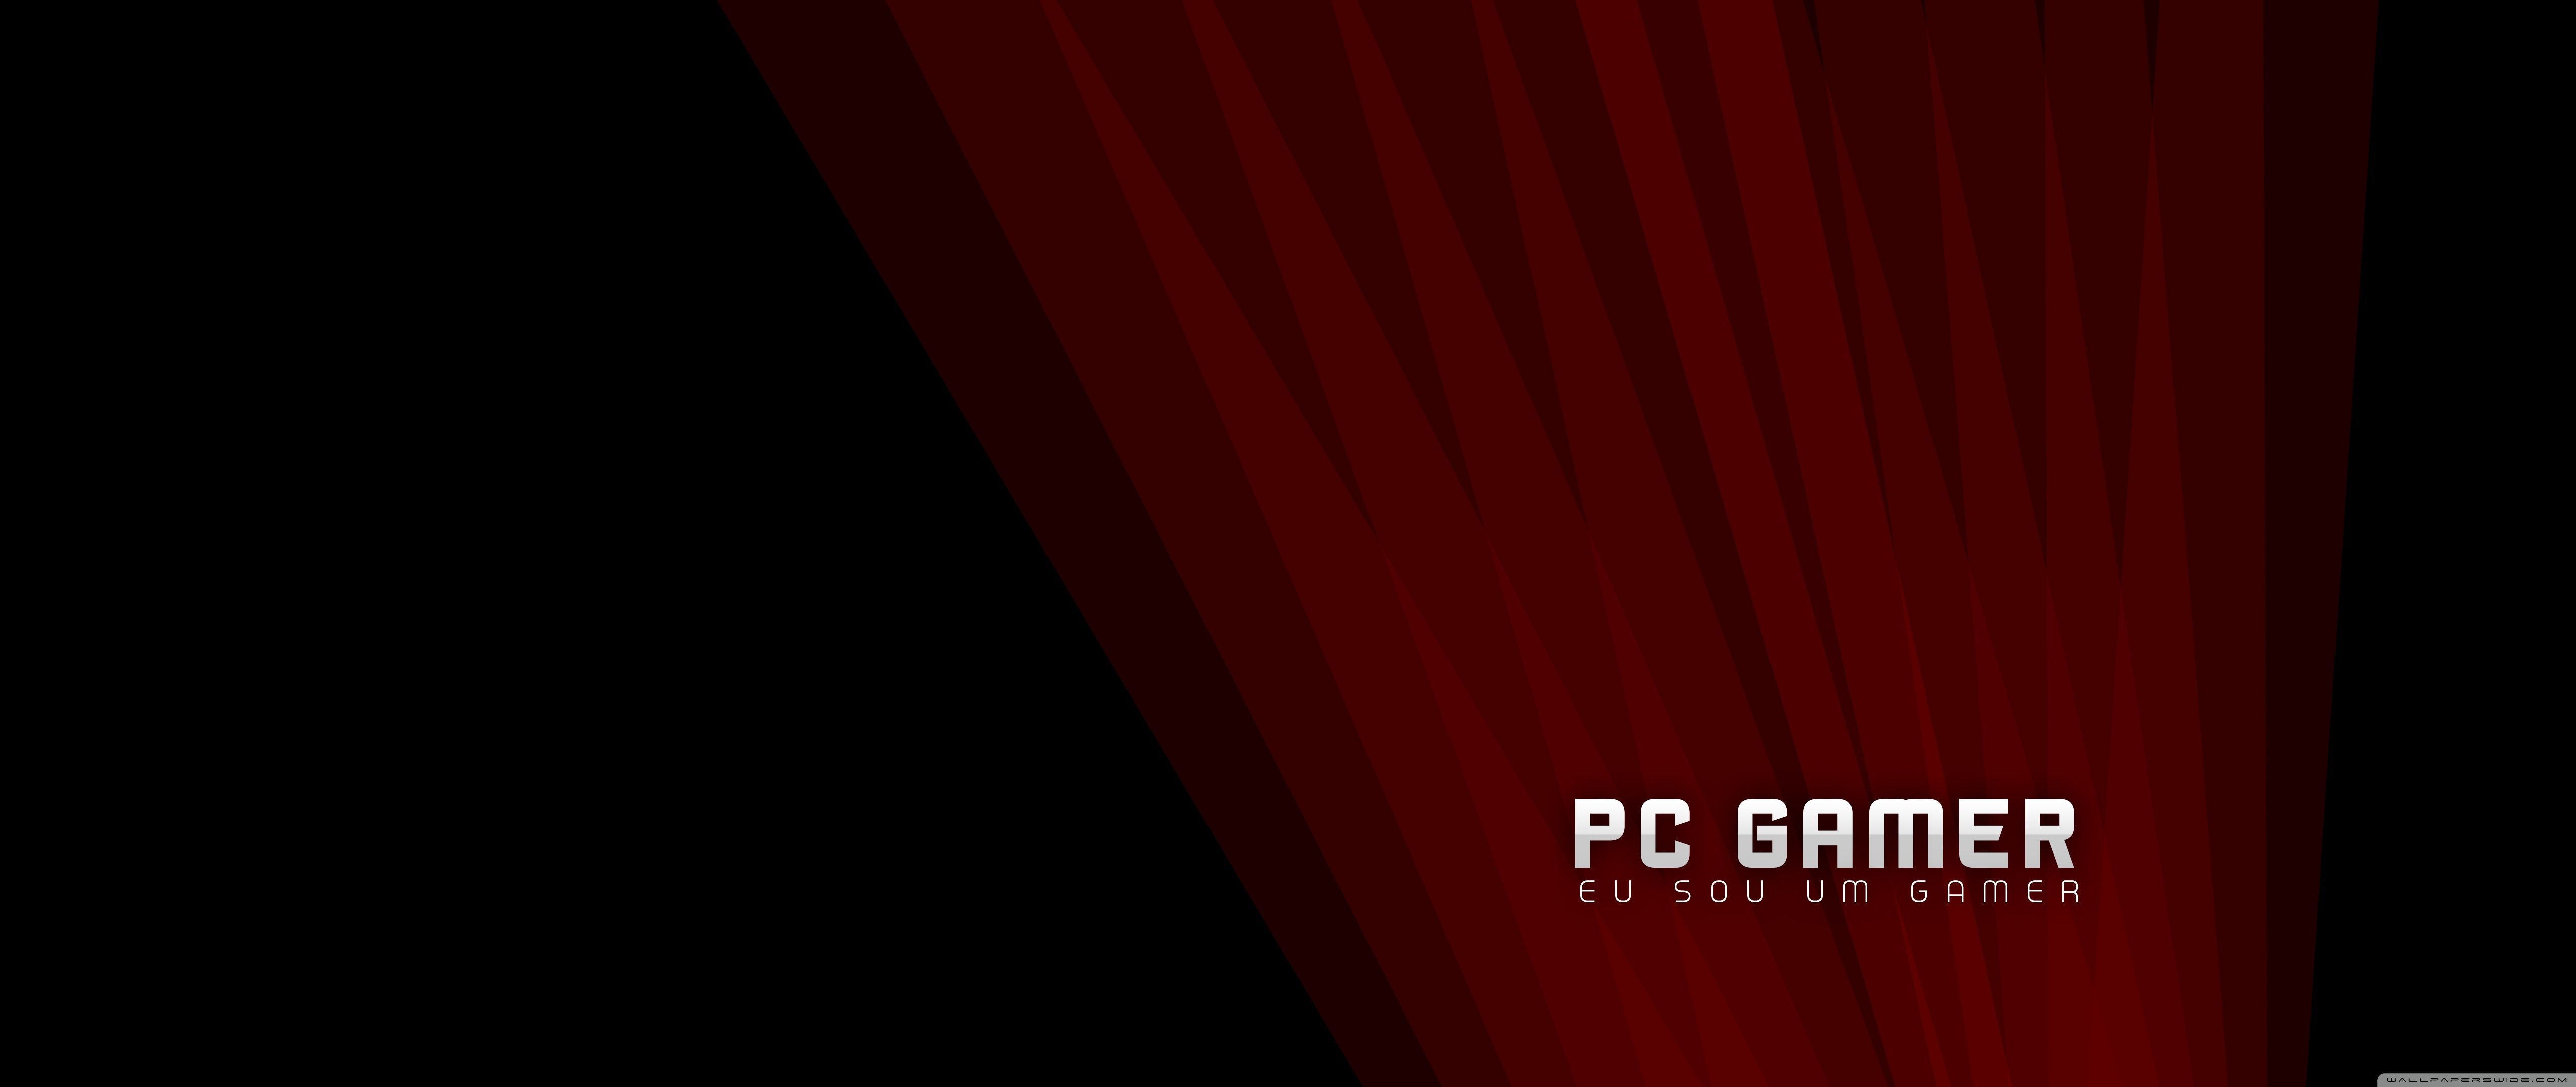 PC Gamer Wallpaper Free PC Gamer Background